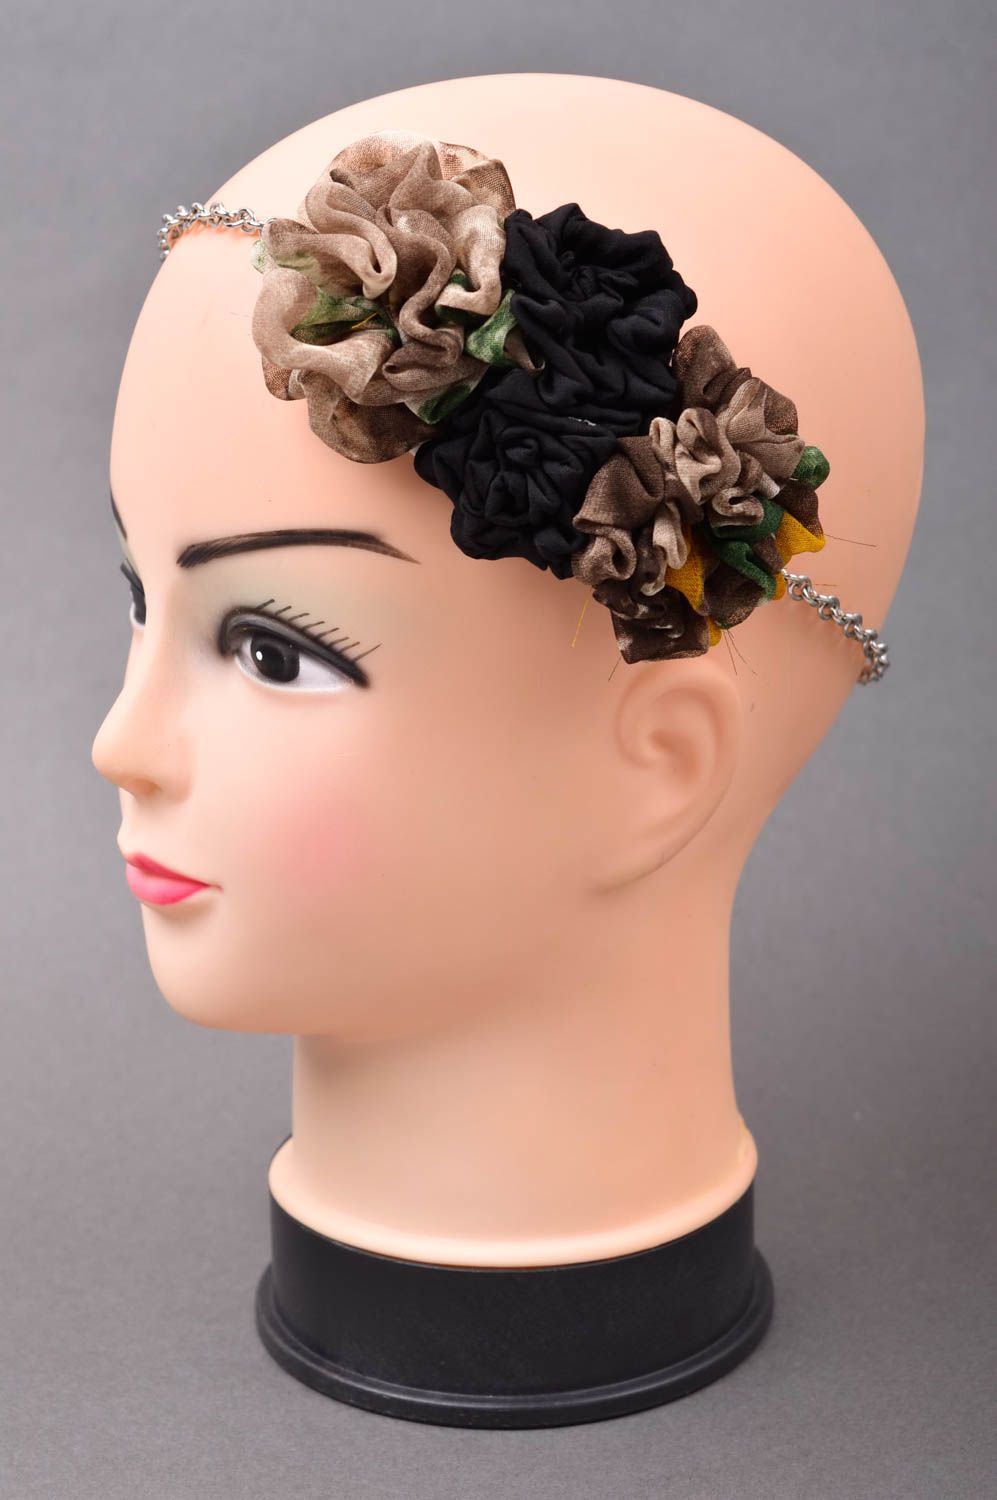 Homemade headband designer hair accessories girls headband gifts for women  photo 1